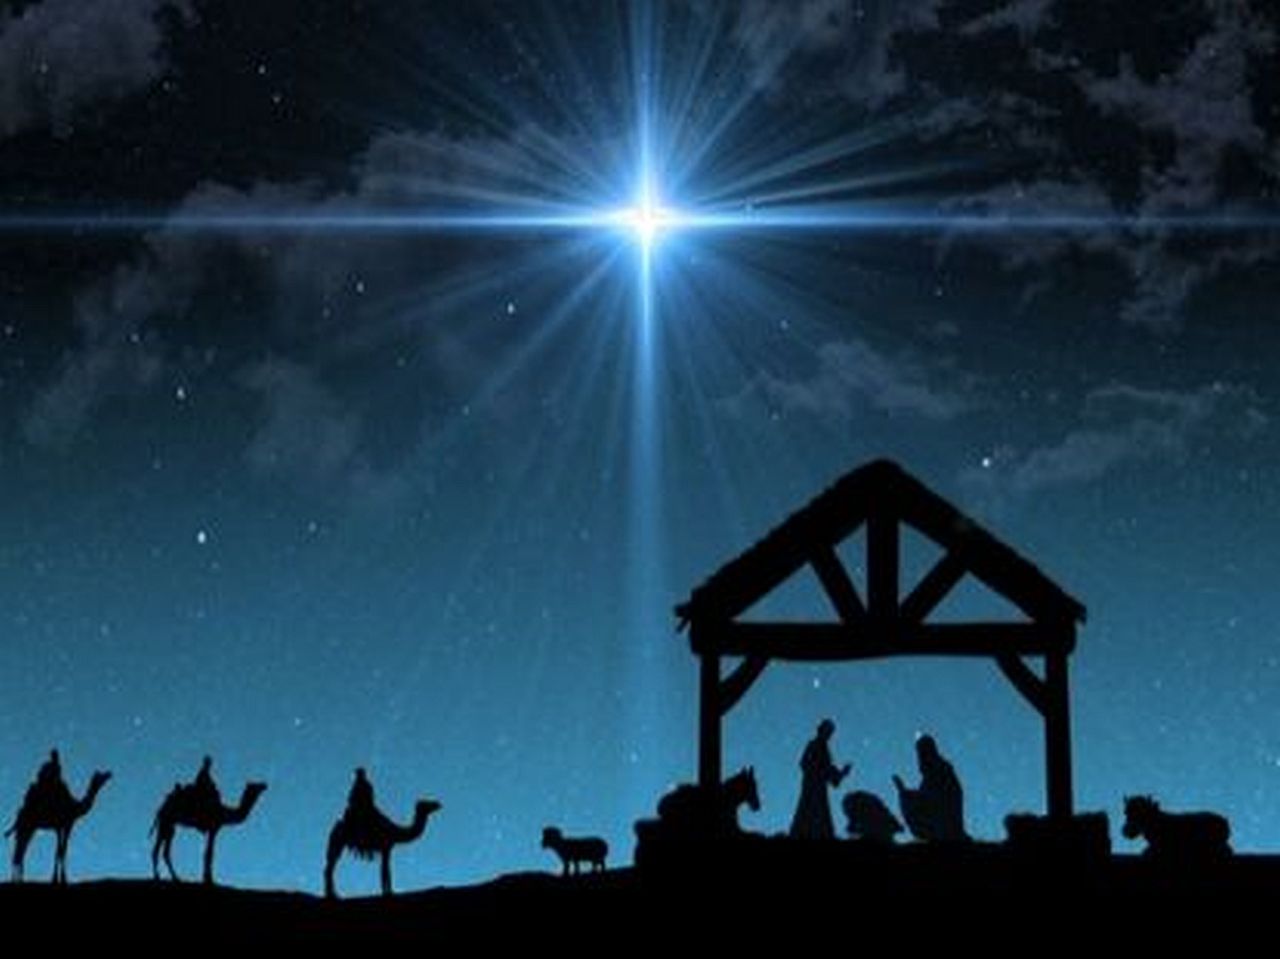 Nativity - Christmas